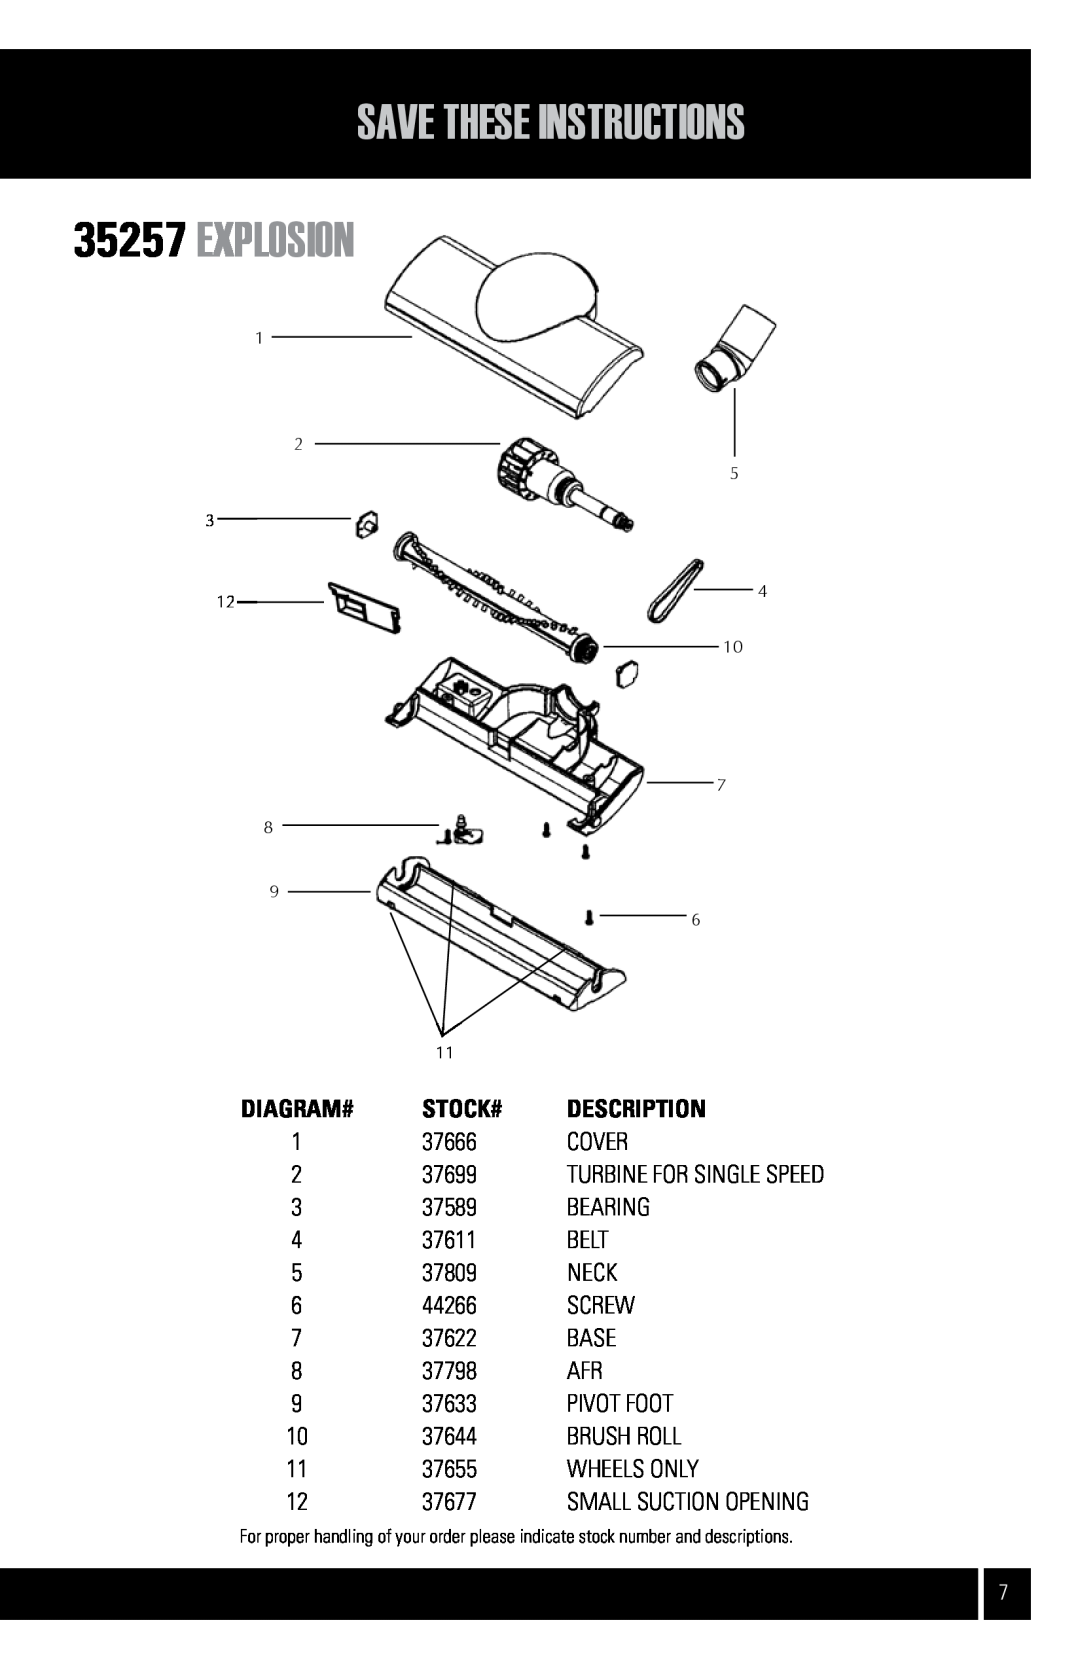 Air King CVS-11T manual explosion, Save These Instructions, Diagram#, Stock#, Description 